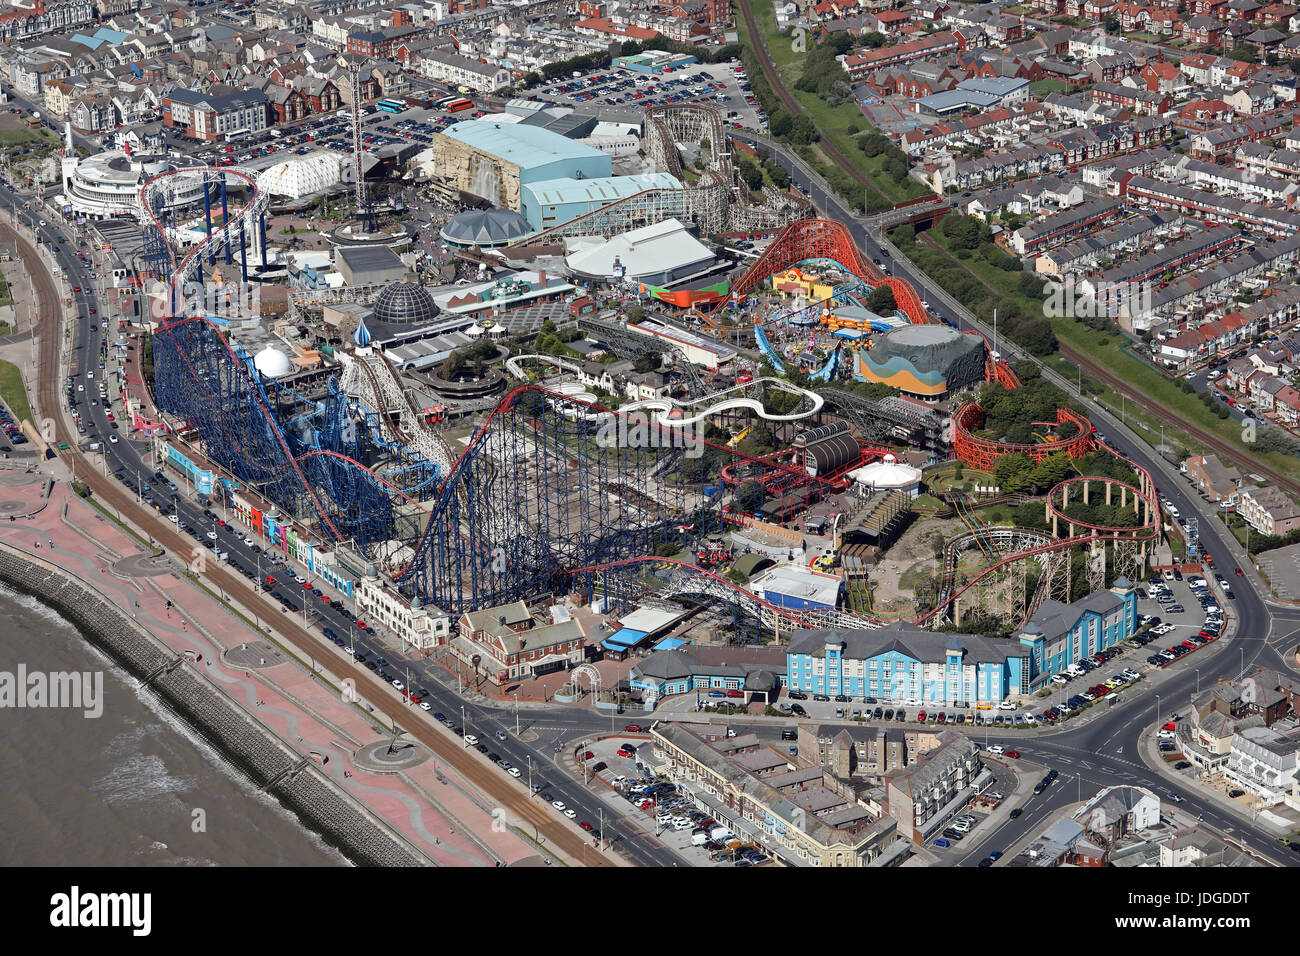 aerial view of Blackpool Pleasure Beach, UK Stock Photo